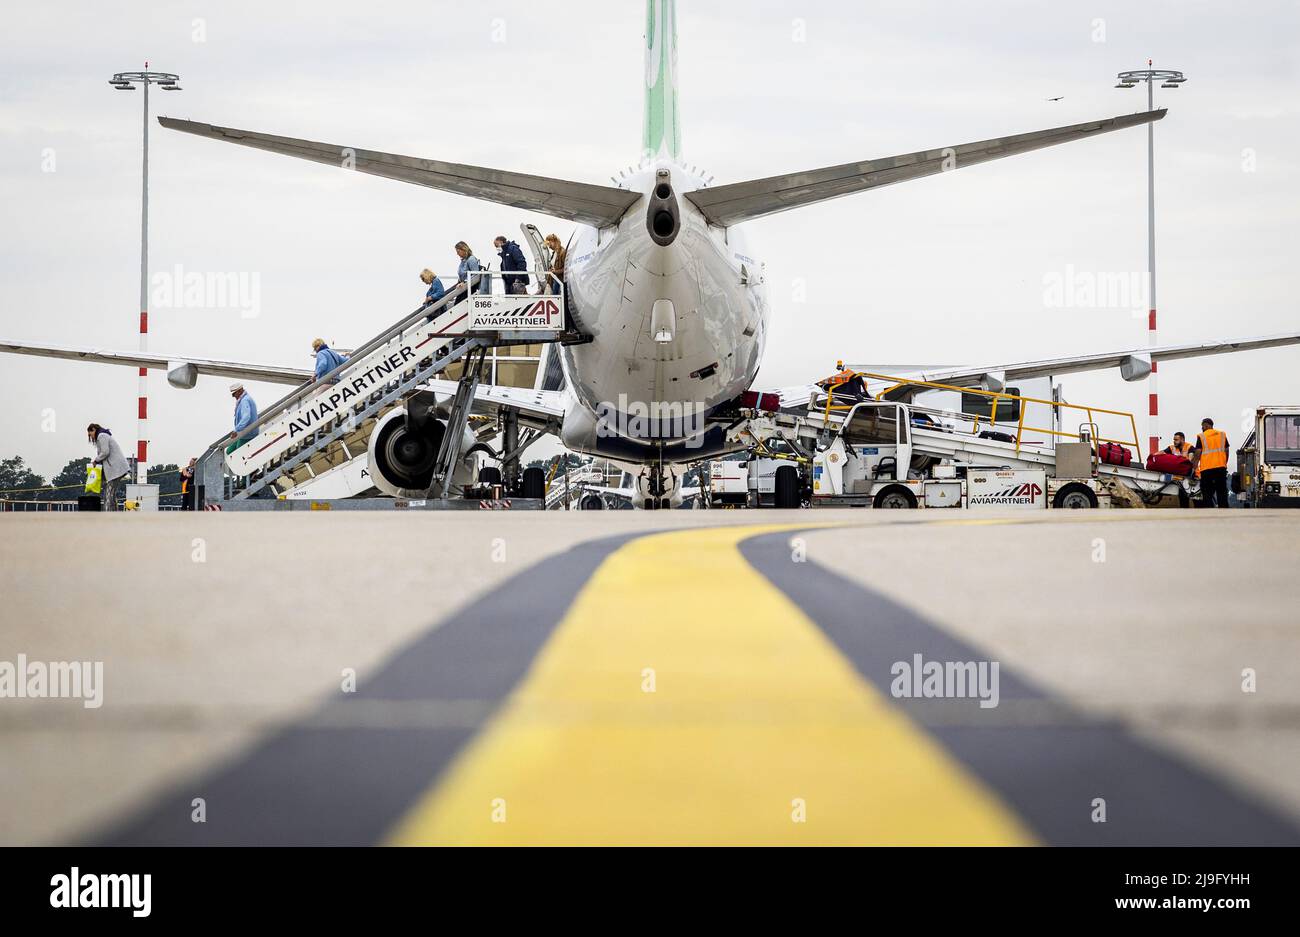 Vliegtuigmaatschappijen hi-res stock photography and images - Alamy